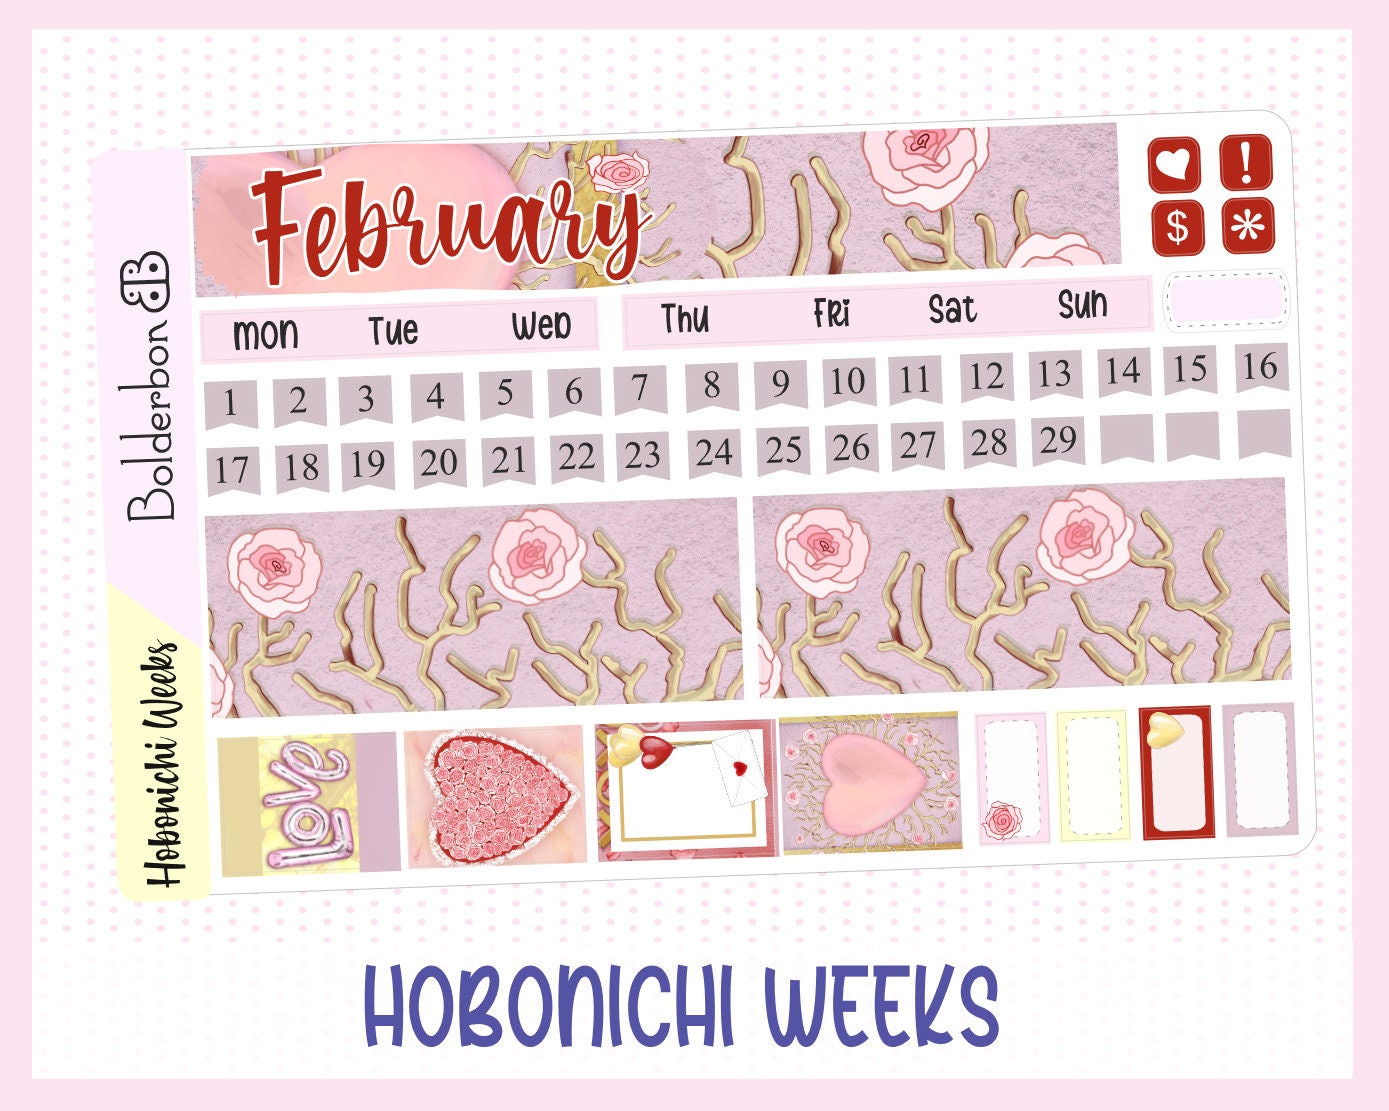 FEBRUARY Hobonichi Weeks Sticker Kit || Monthly Planner Stickers for Hobonichi Weeks, Valentine, Love